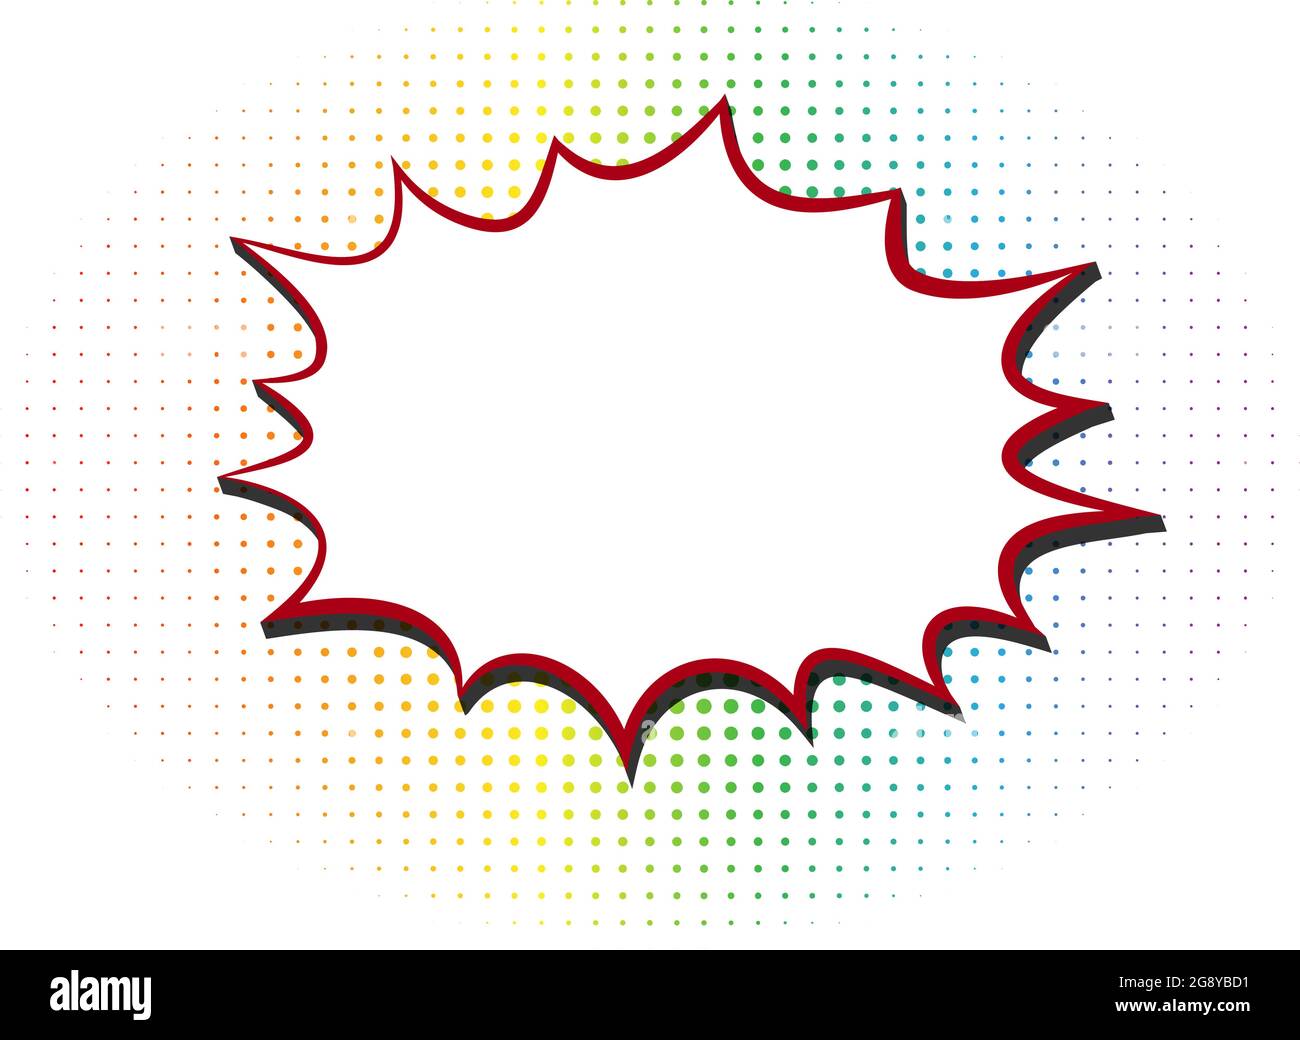 Comic Splash Sprechblase mit Kopierraum auf regenbogenfarbenem Halbtonraster, Vektorgrafik Stock Vektor